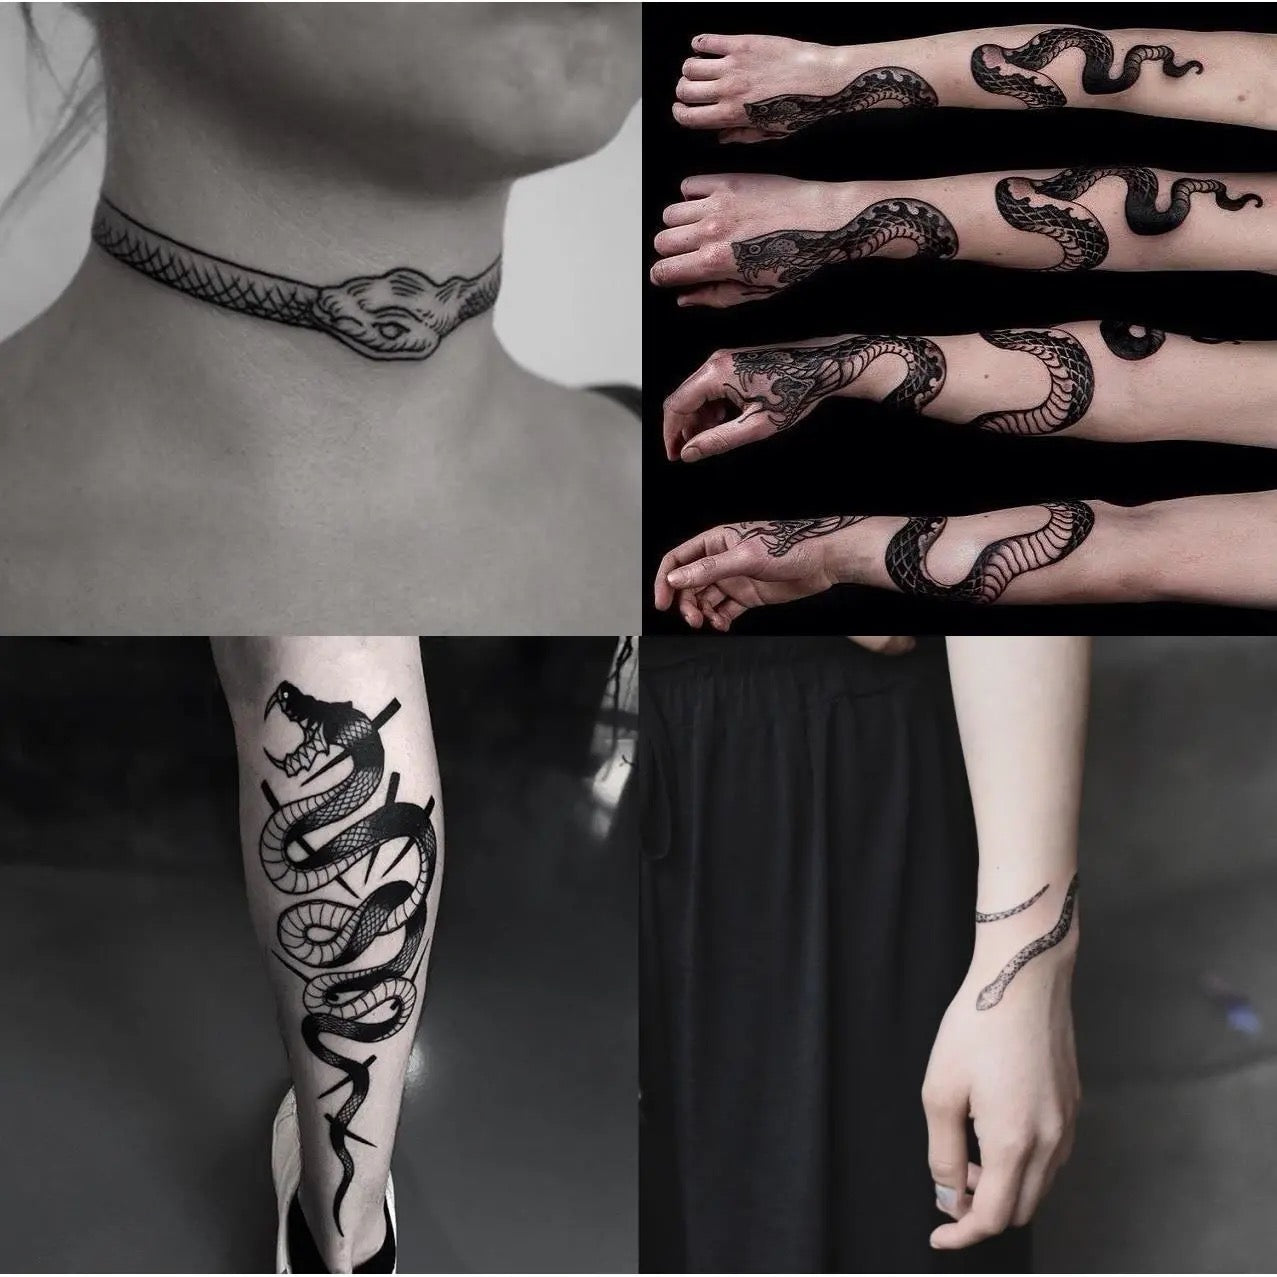 4Pcs Black Snake Temporary Tattoos For Men Women Neck Arm Body Art Waterproof